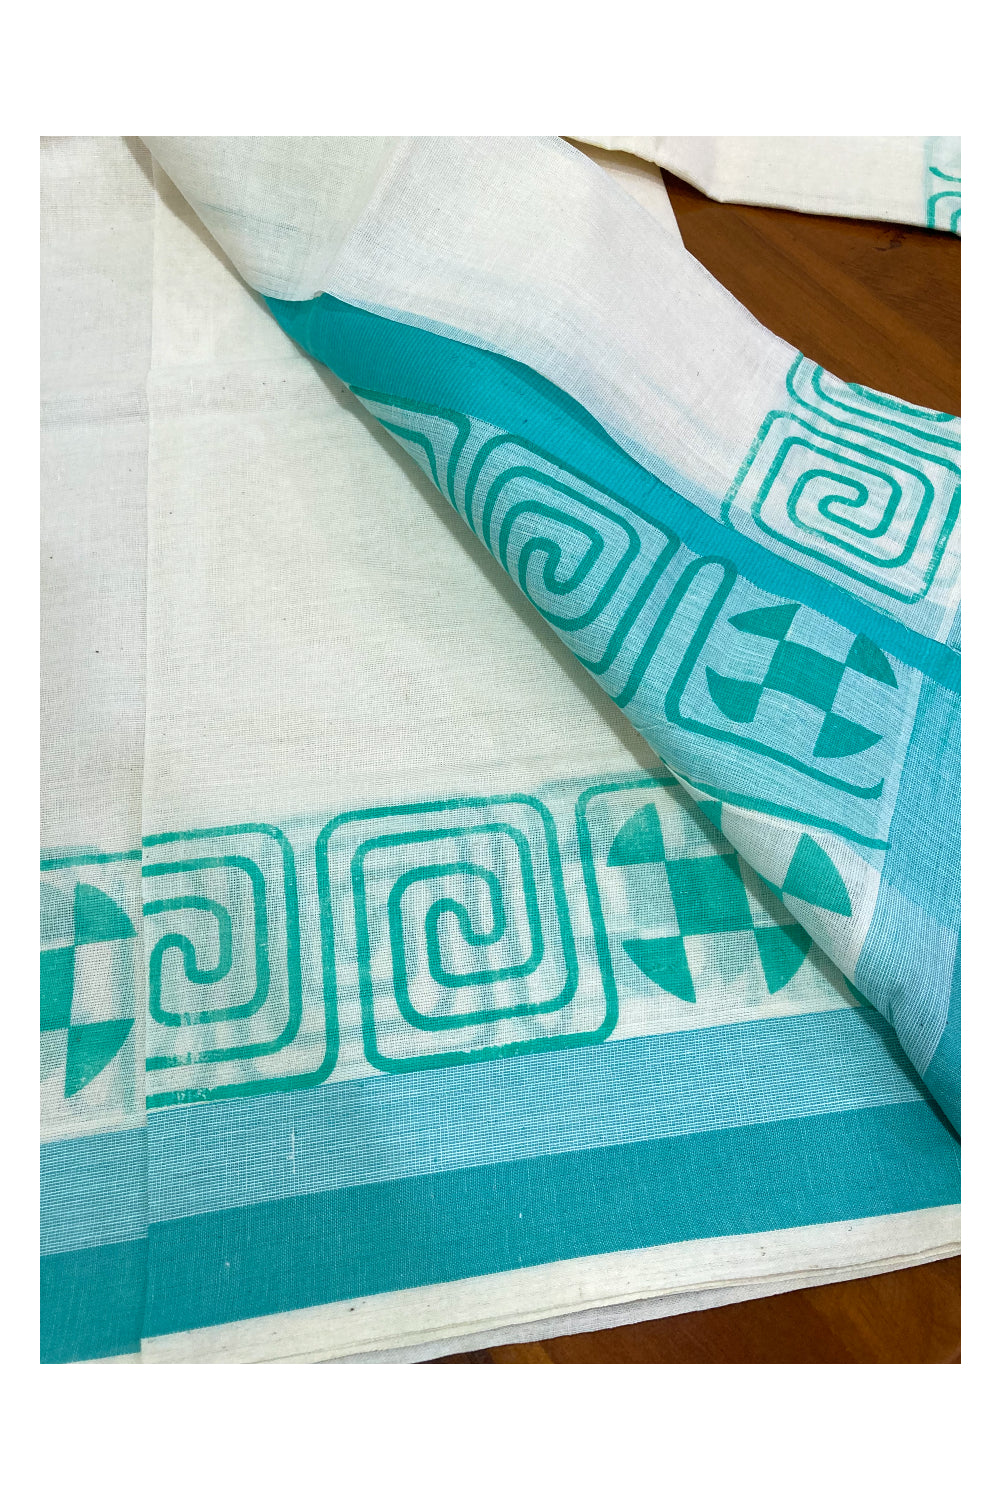 Kerala Cotton Mundum Neriyathum Single (Set Mundu) with Turquoise Block Print Border and Tassels Work